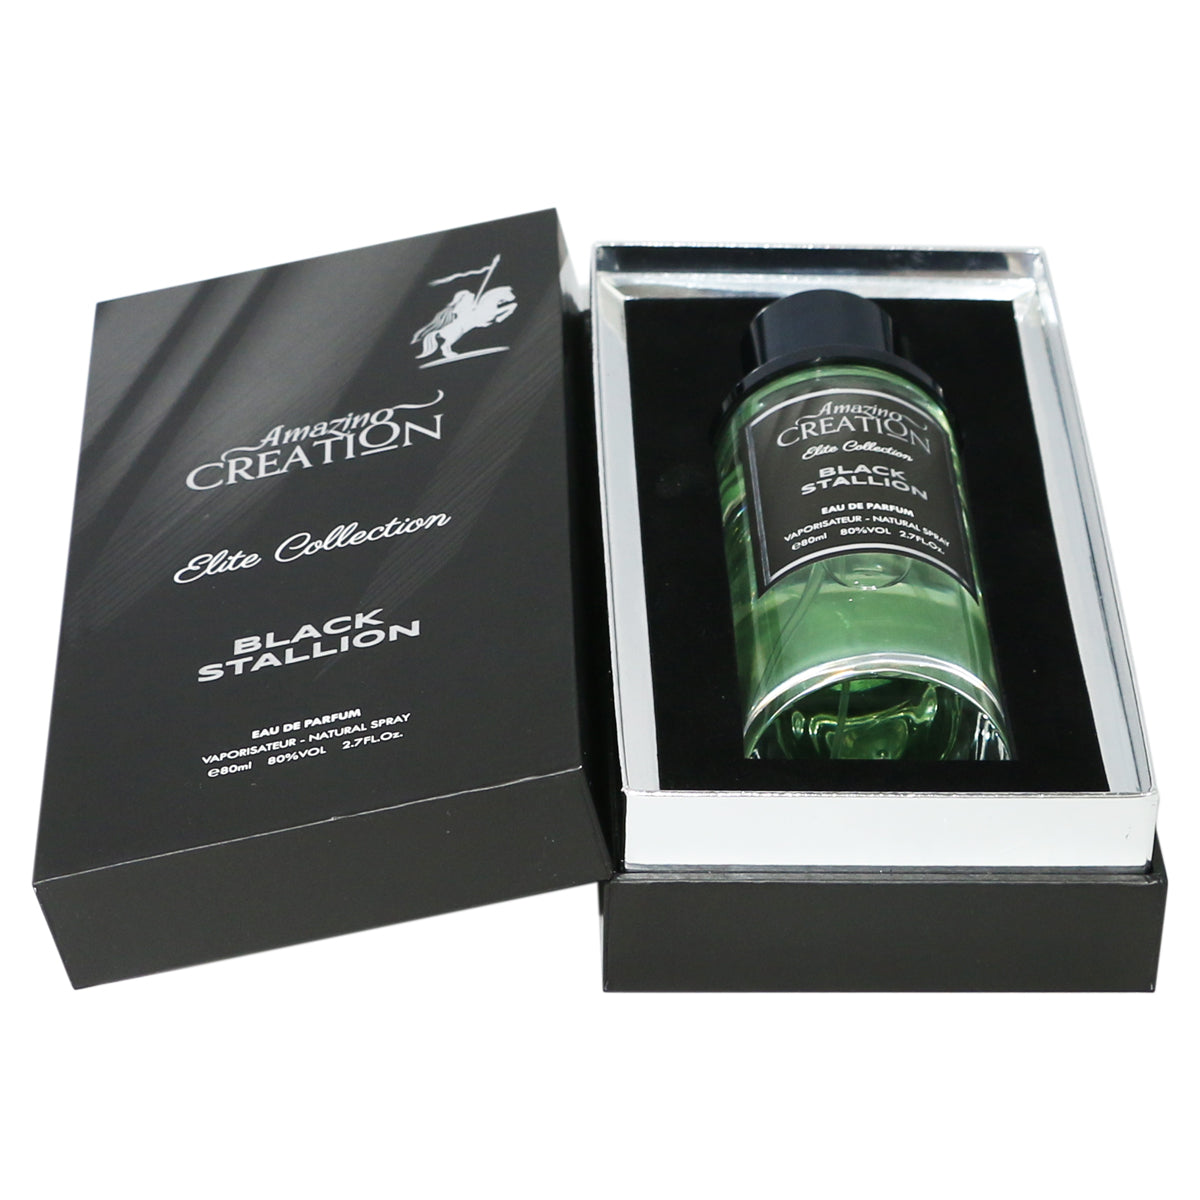 Black Stallion Perfume for Men by Amazing creation